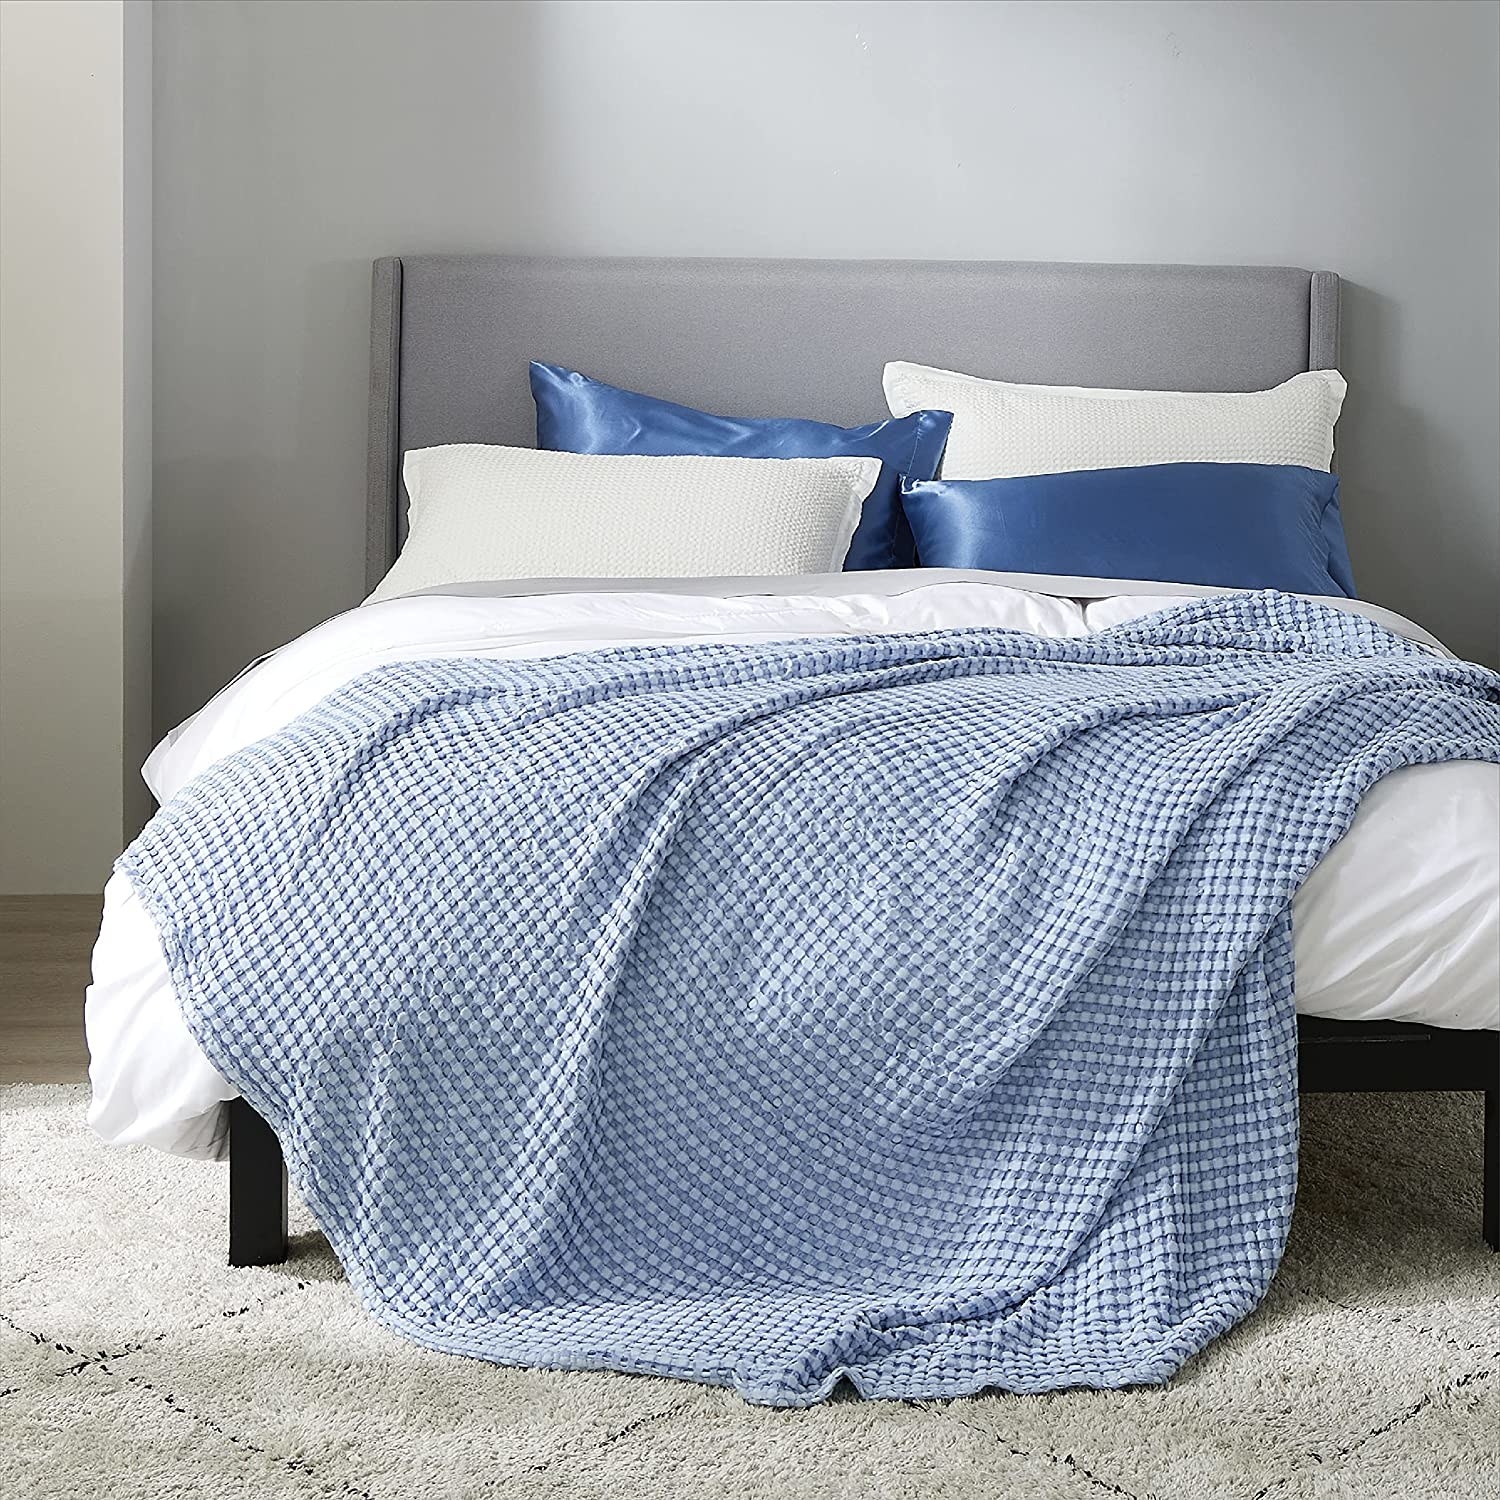 blue waffle cotton blanket over white bedding set